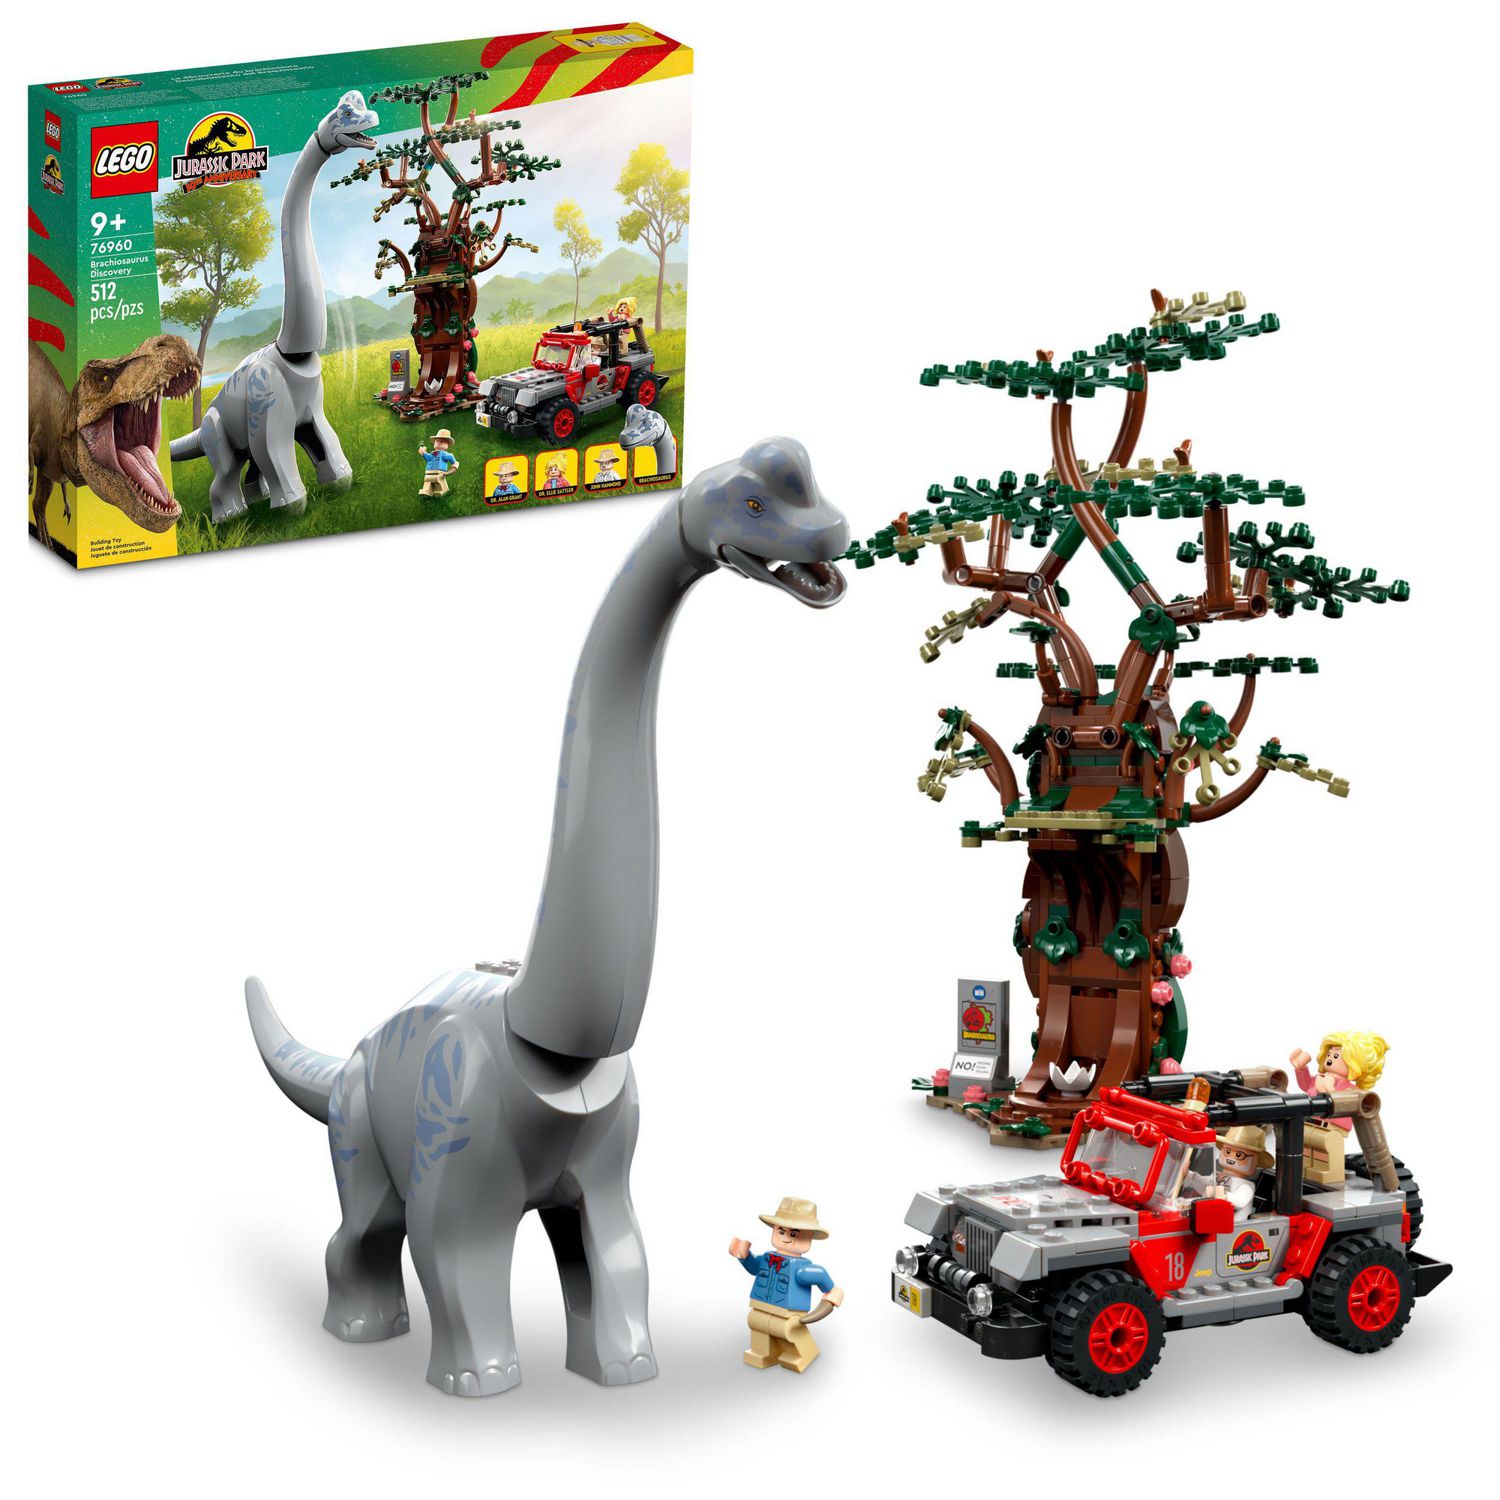 LEGO Jurassic Park Brachiosaurus Discovery 76960 Jurassic Park